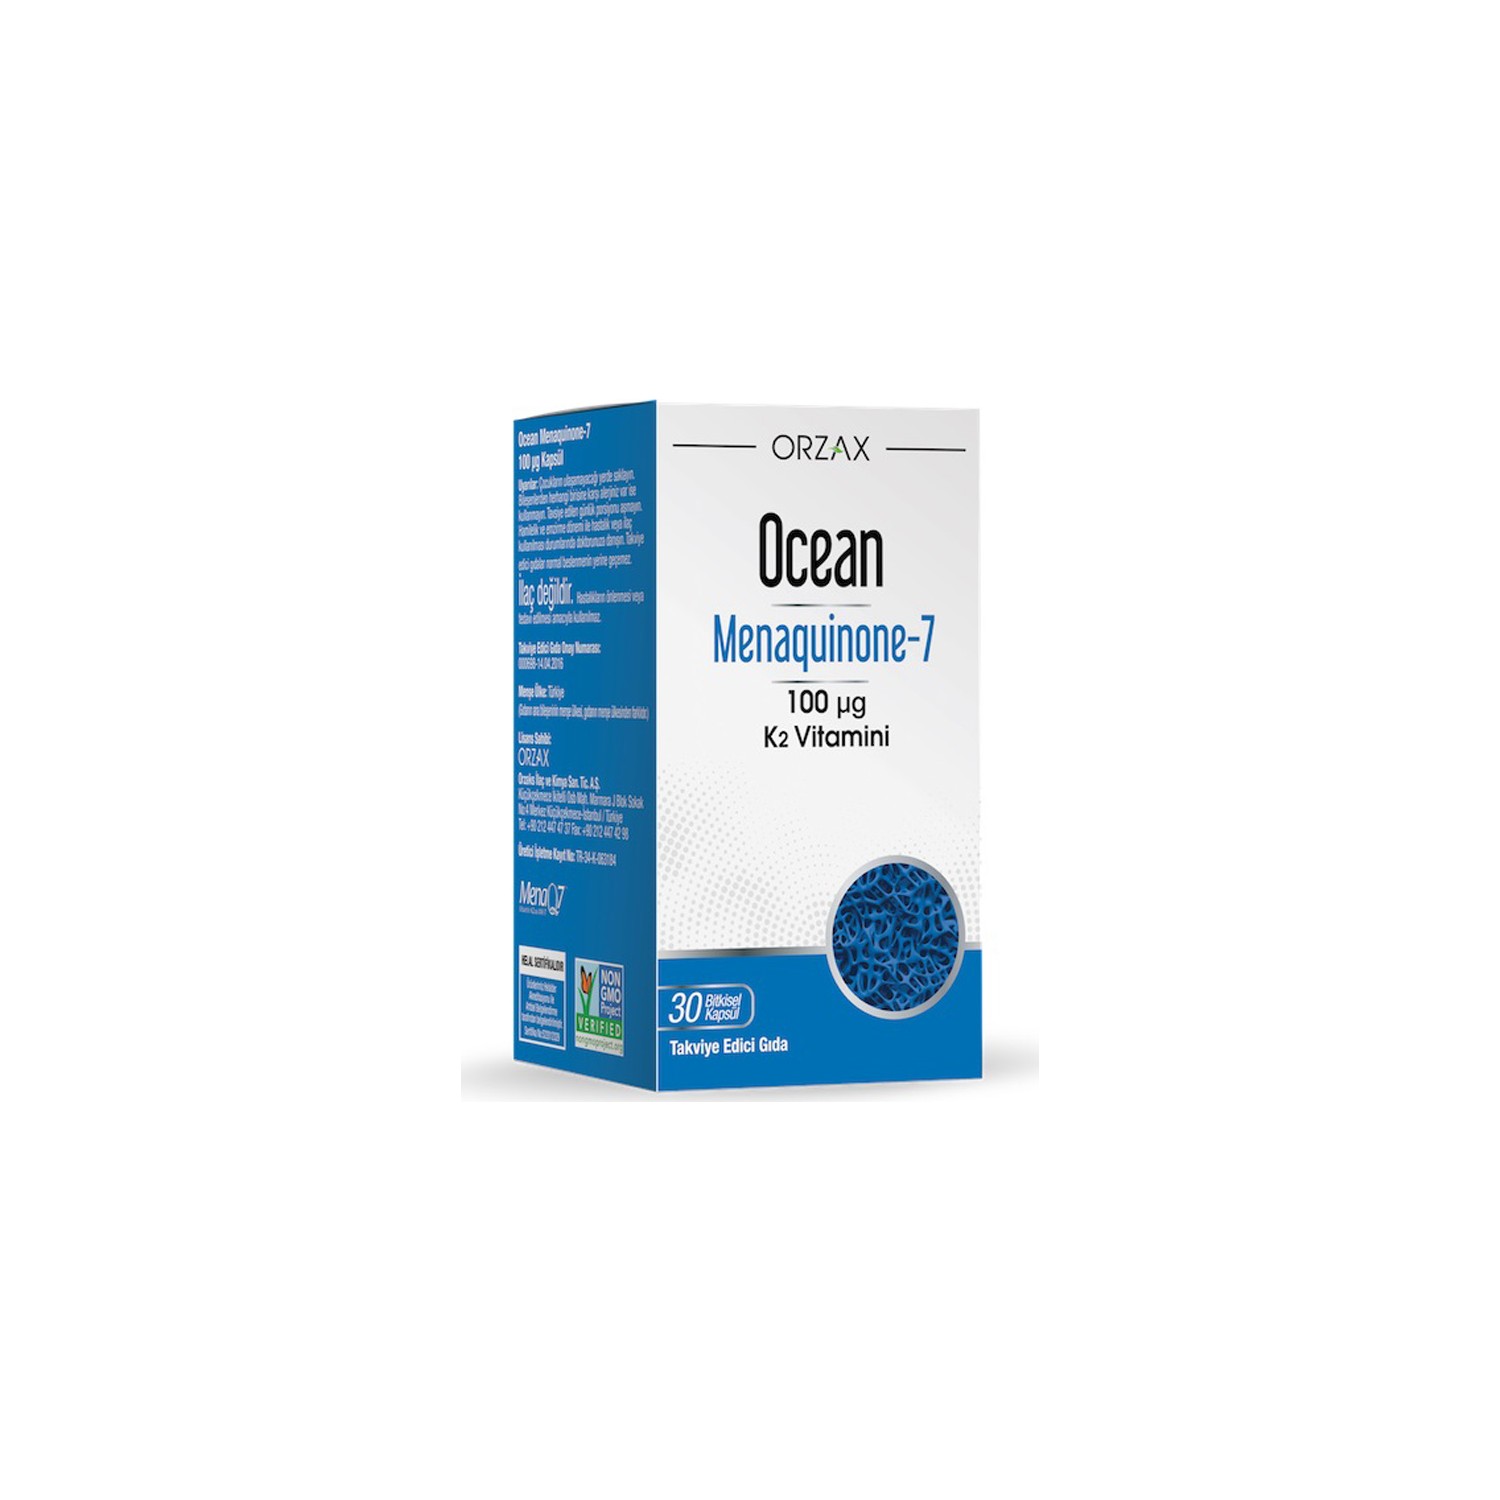 Пищевая добавка Orzax Ocean Mk-7 Vitamin К2 100 мкг, 30 капсул добавка селена ocean 100 мкг 30 таблеток